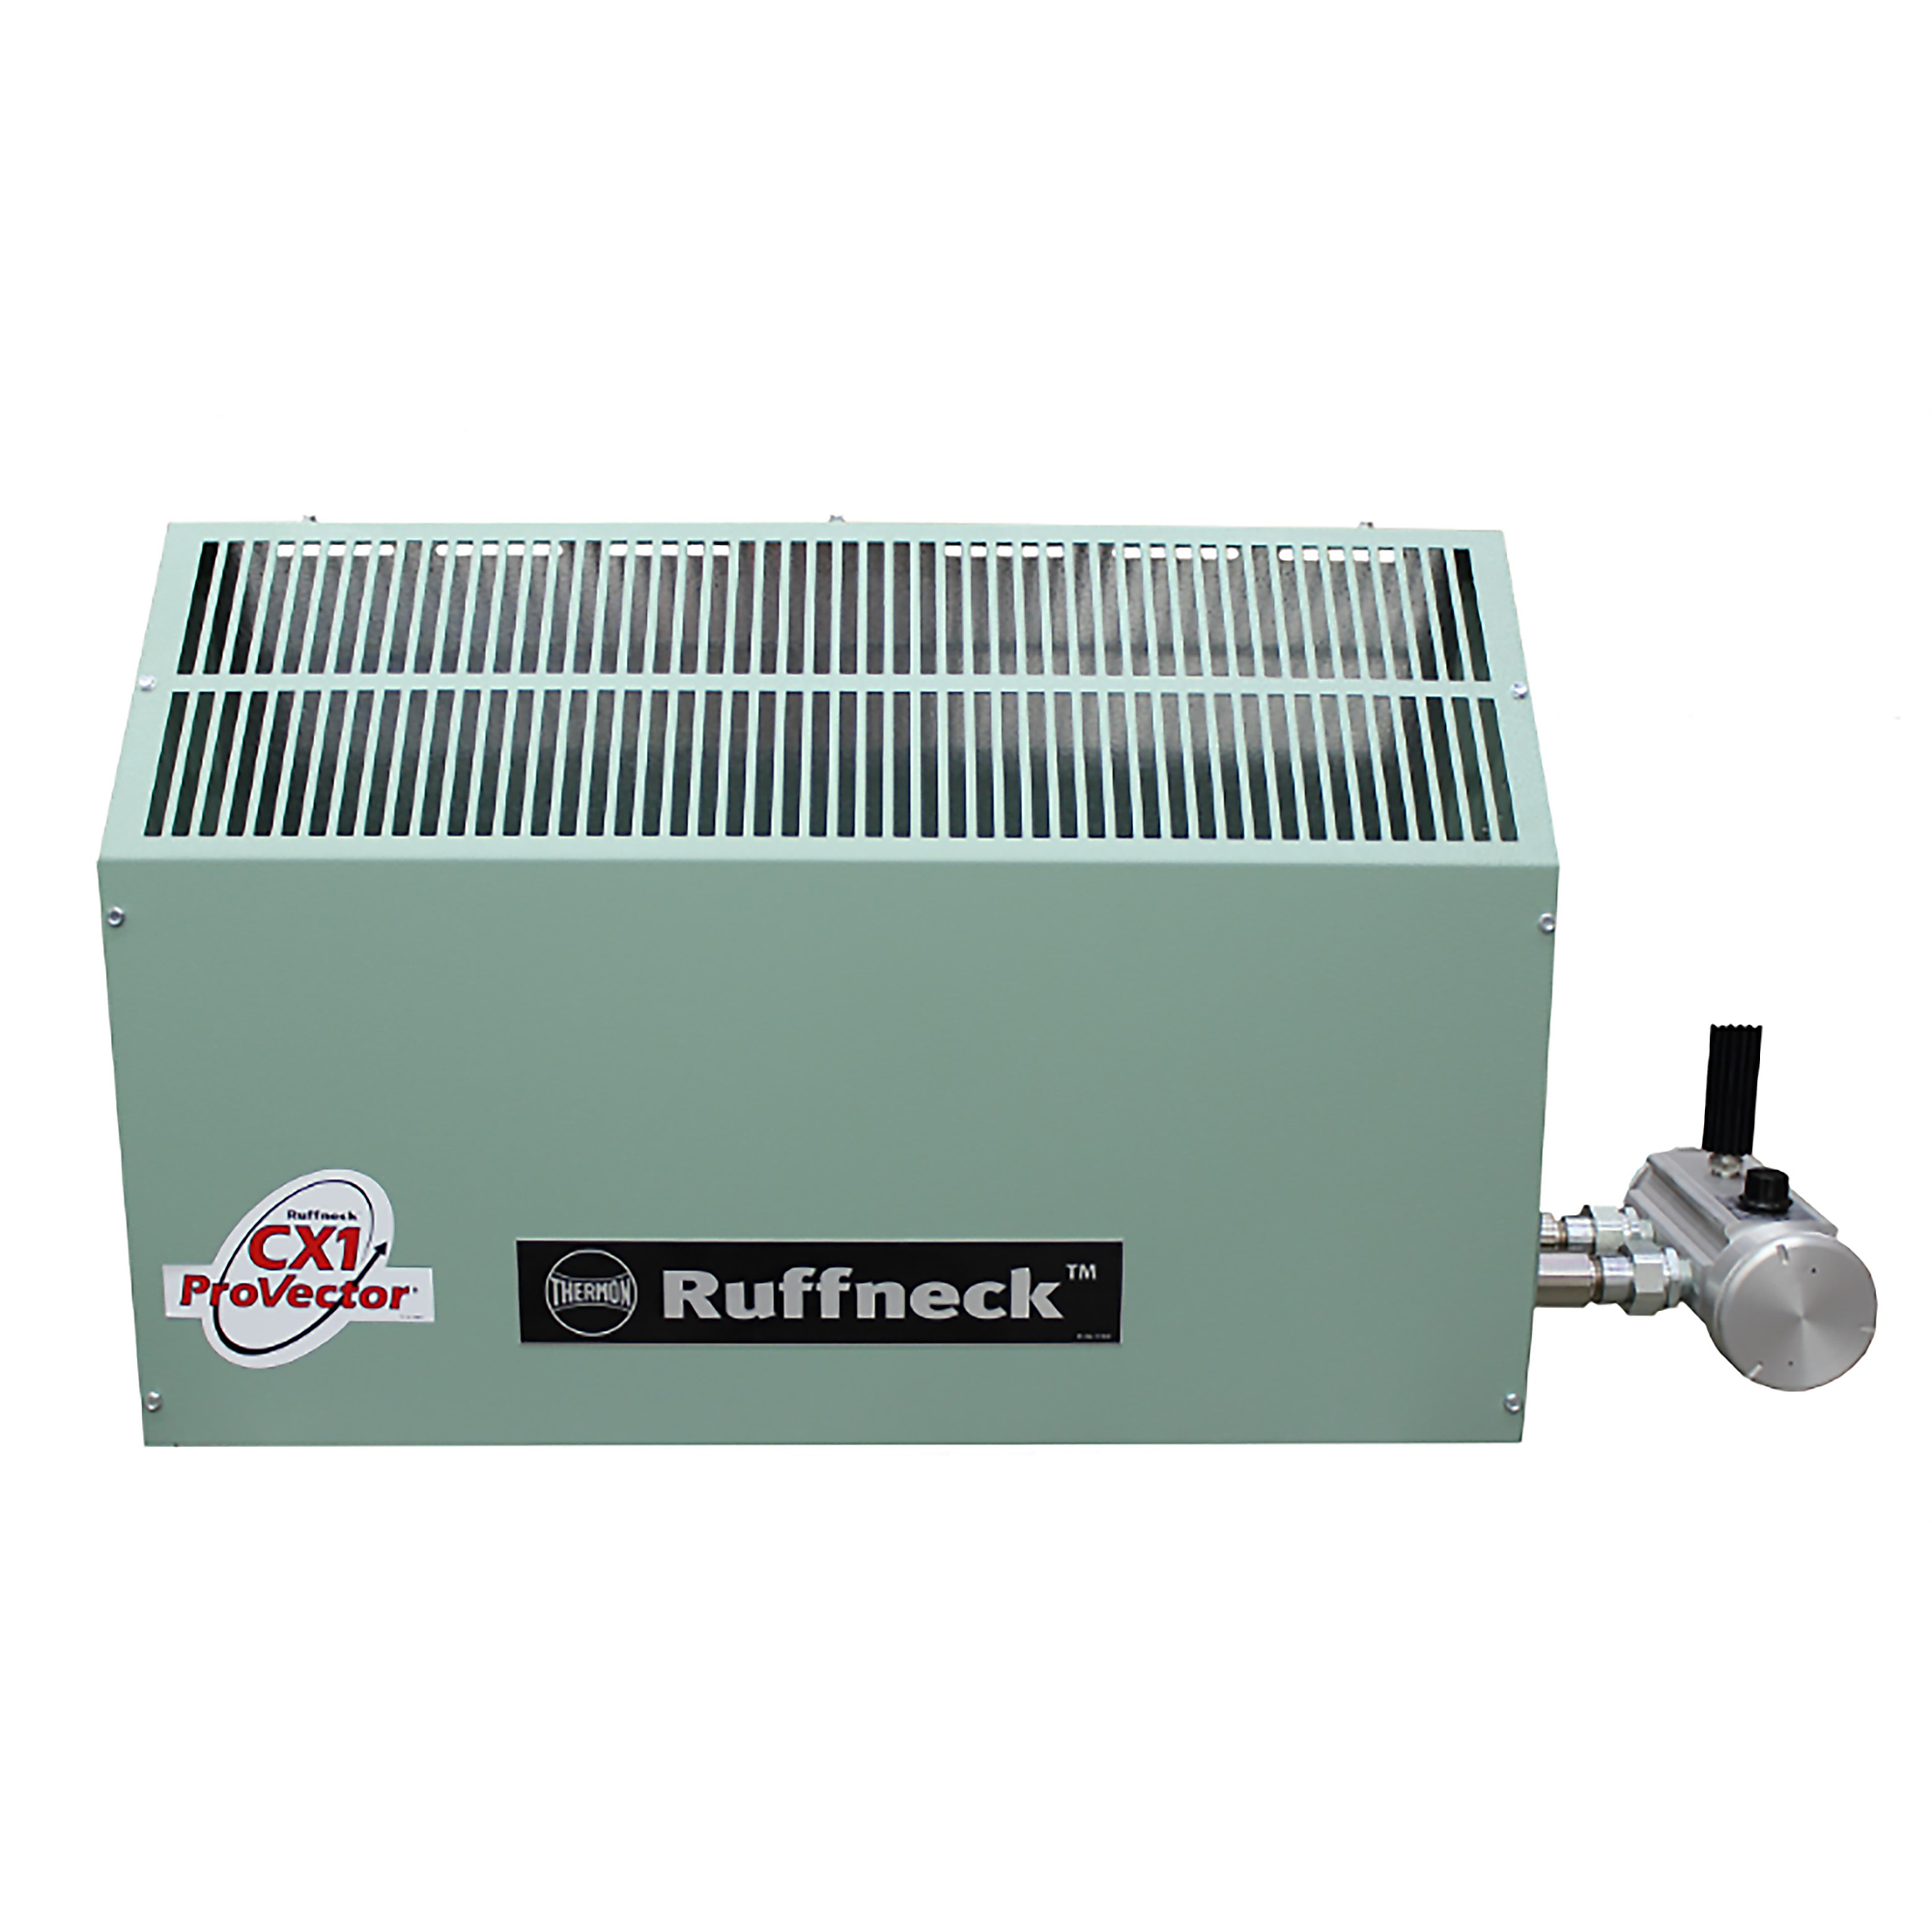 Ruffneck, CX1 ProVectorEP Convection Heater 3600W, Heat Type Convection, Heat Output 12283 Btu/hour, Model CX1480160036T2AIIBT